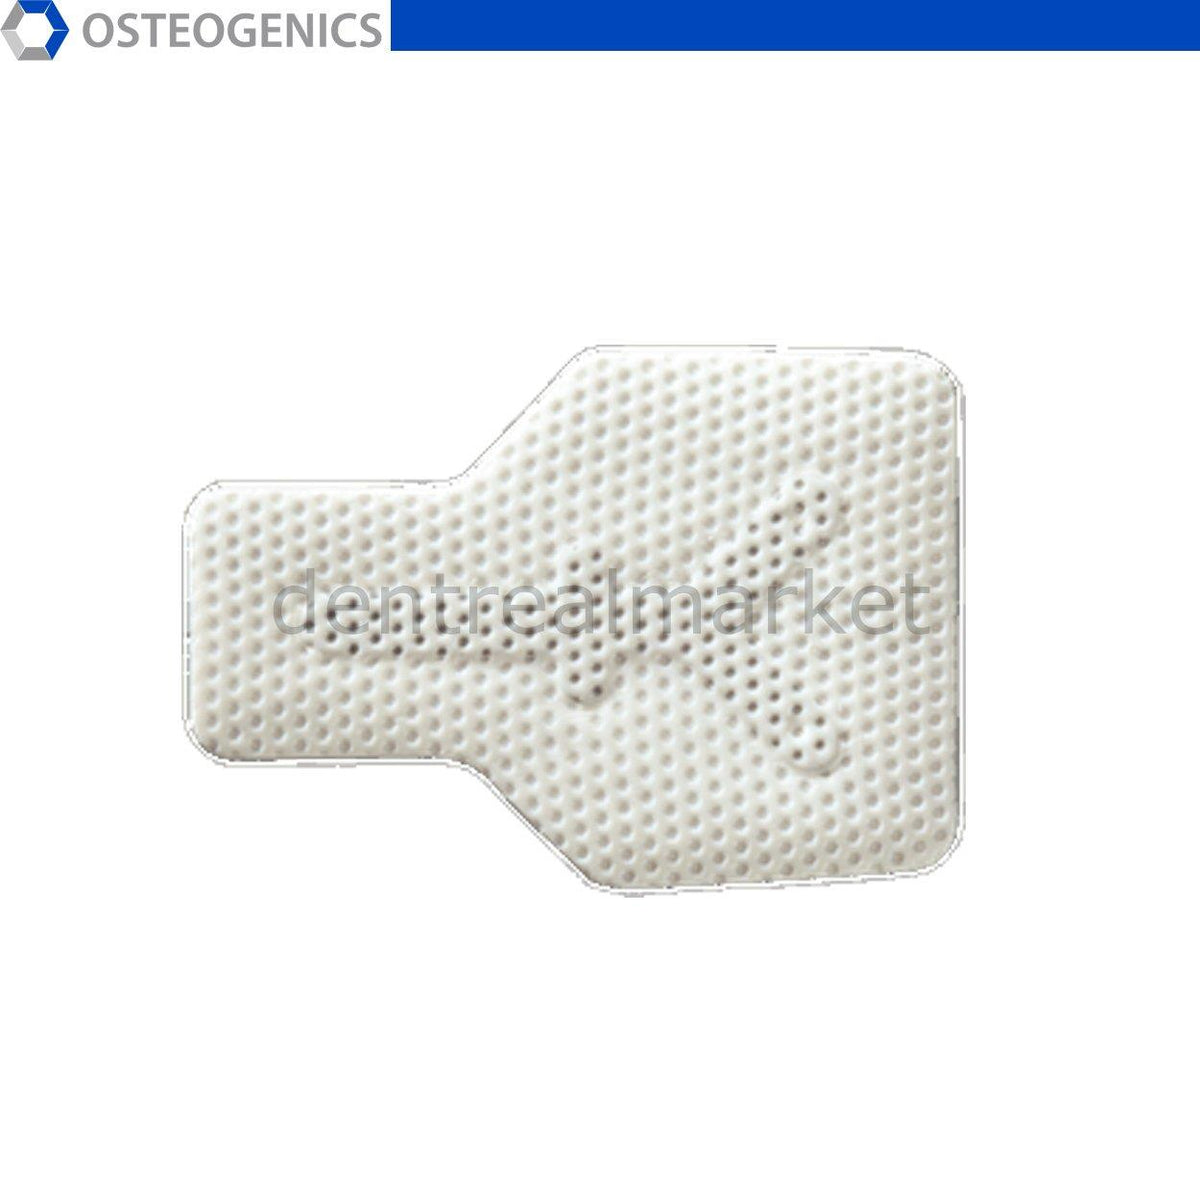 DentrealStore - Osteogenics Cytoplast Titanium High-Density PTFE Membranes - Buccal 17*25 mm